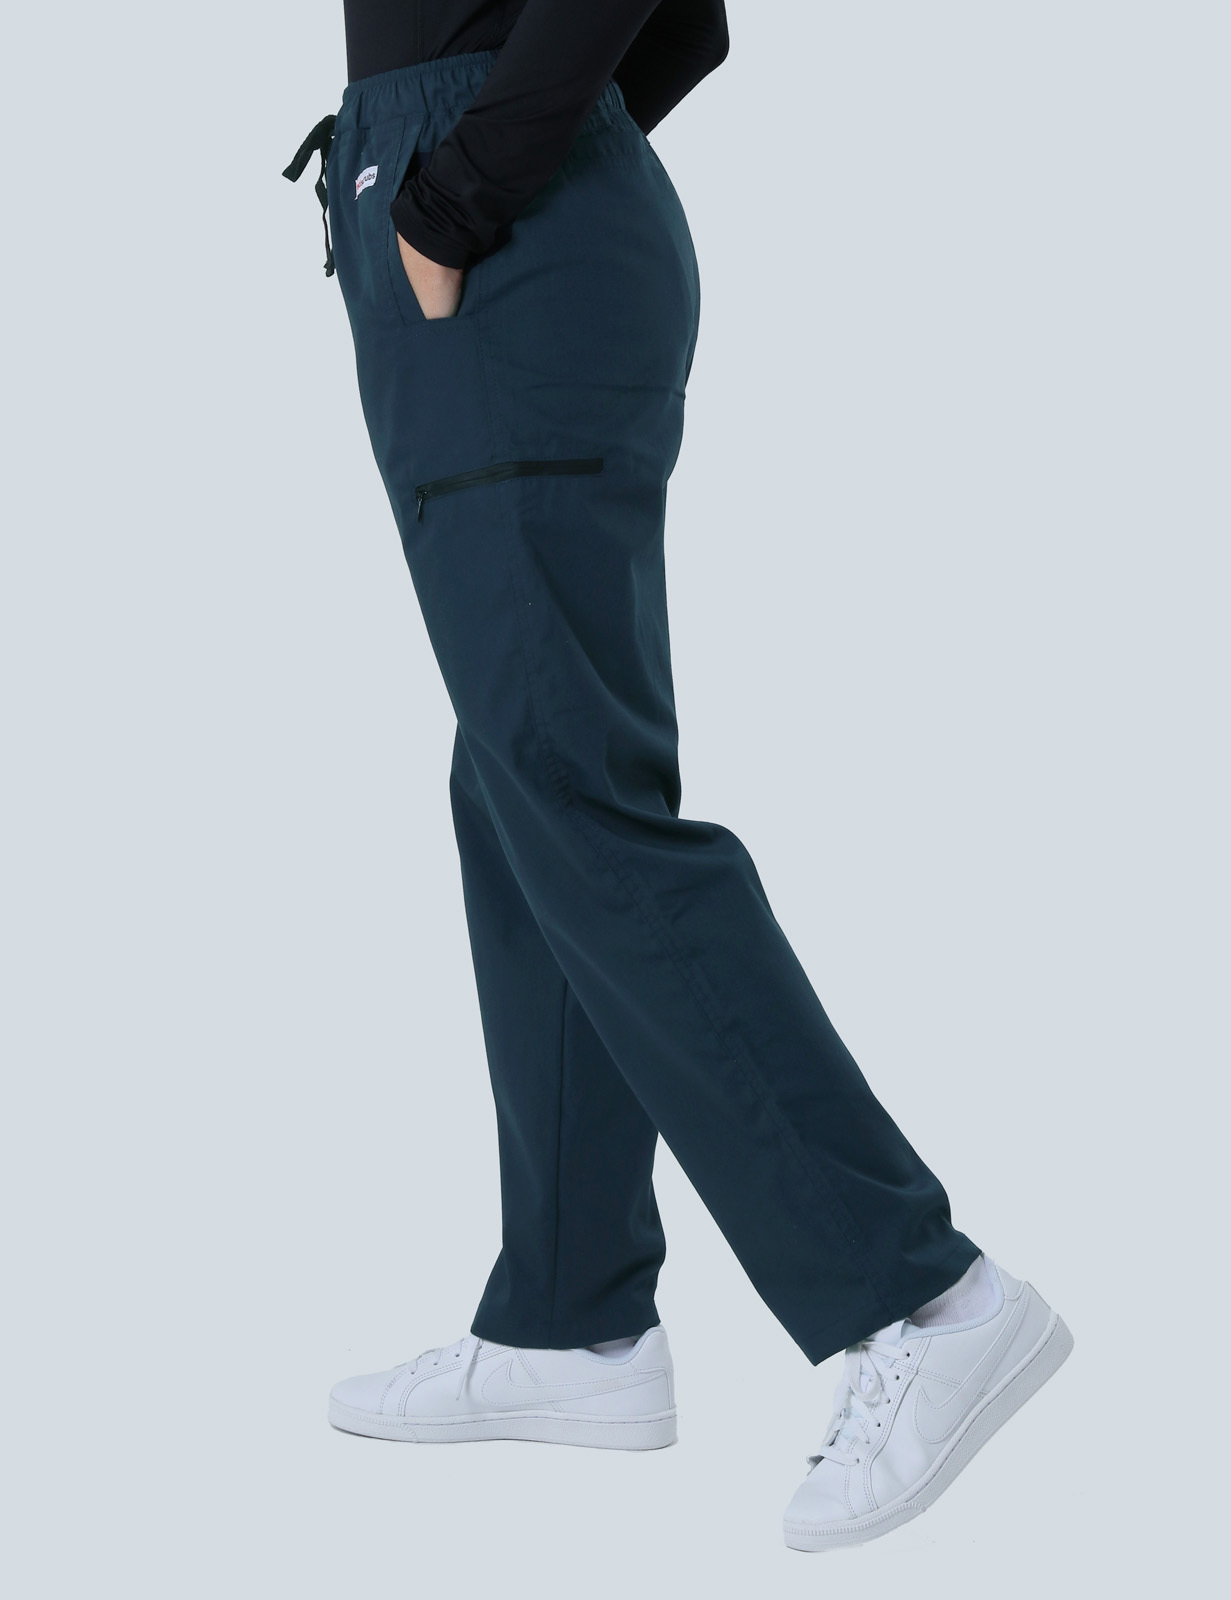 Women's Utility Pants - Navy - Small